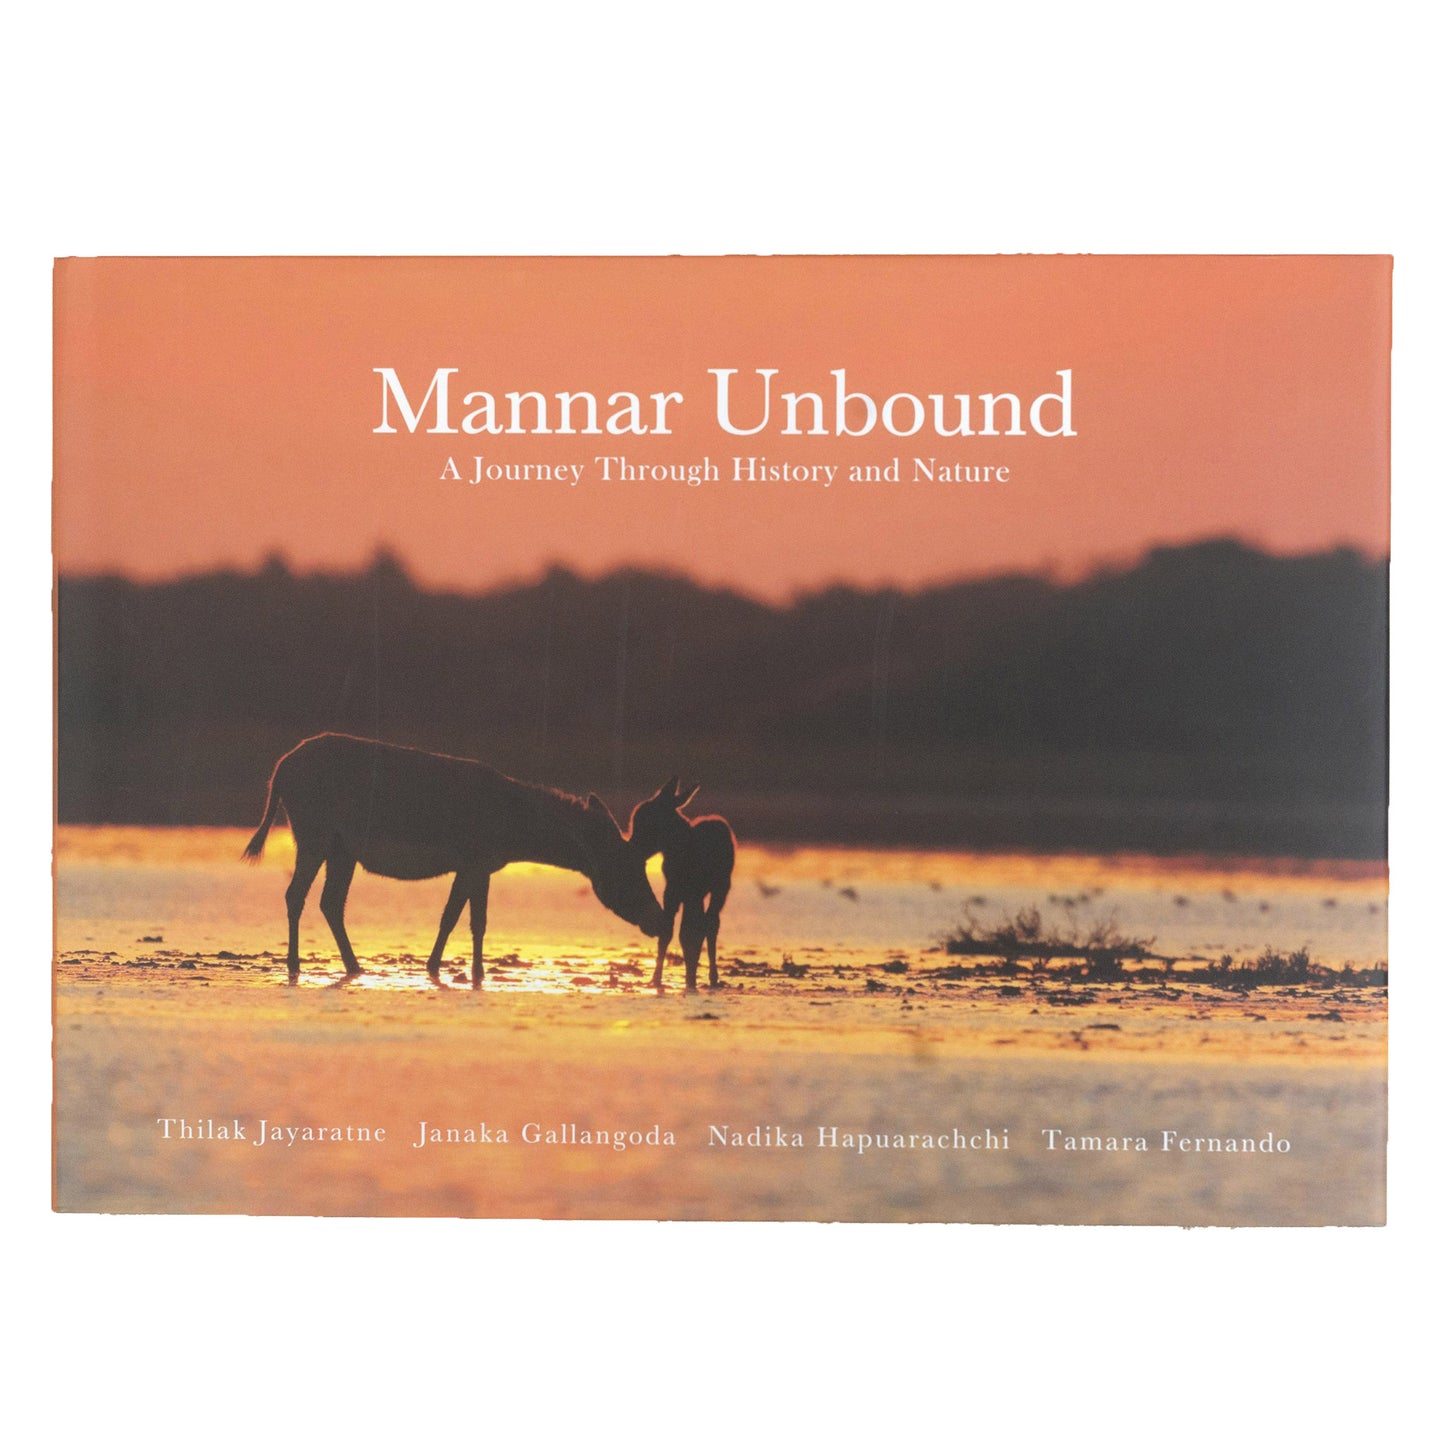 Mannar Unbound by Thilak Jayaratne, Janaka Gallangoda, Nadika Hapuarachchi, Tamara Fernando